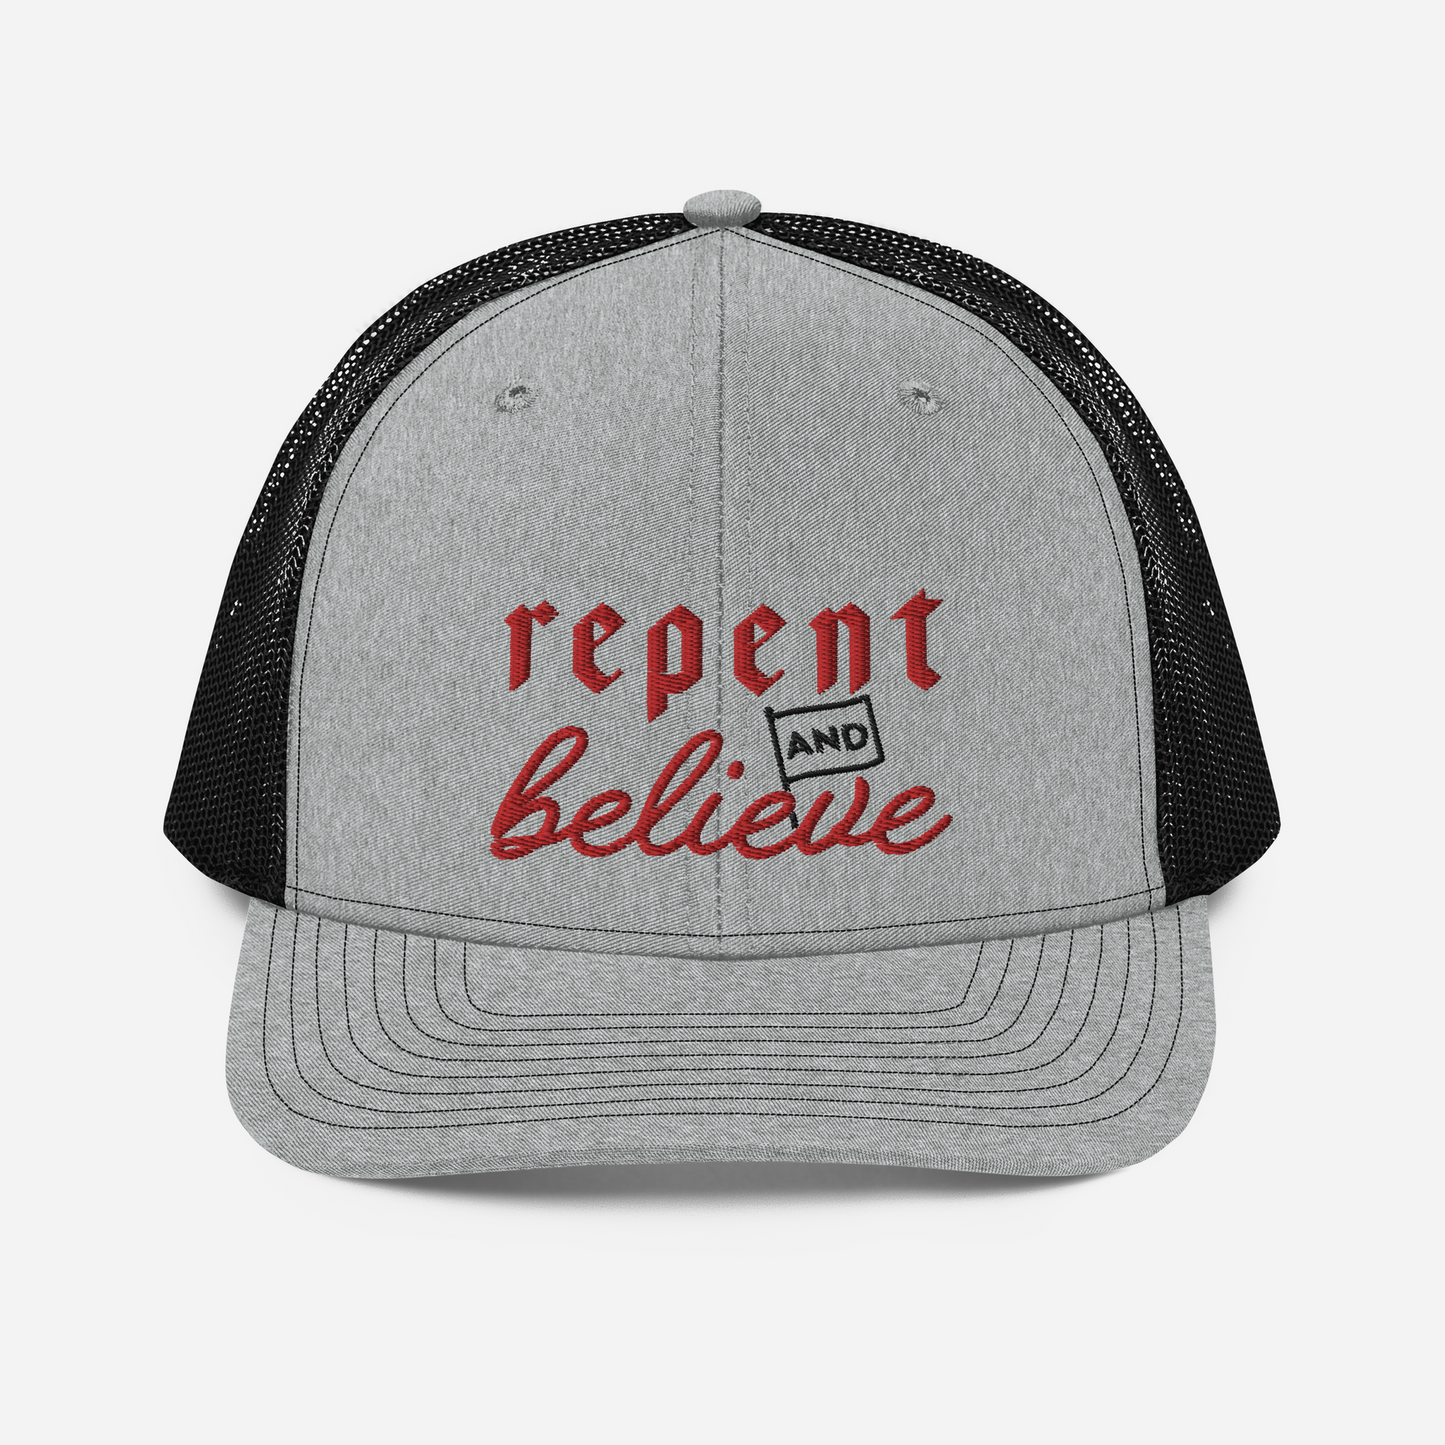 Repent and Believe Richardson Trucker Hat